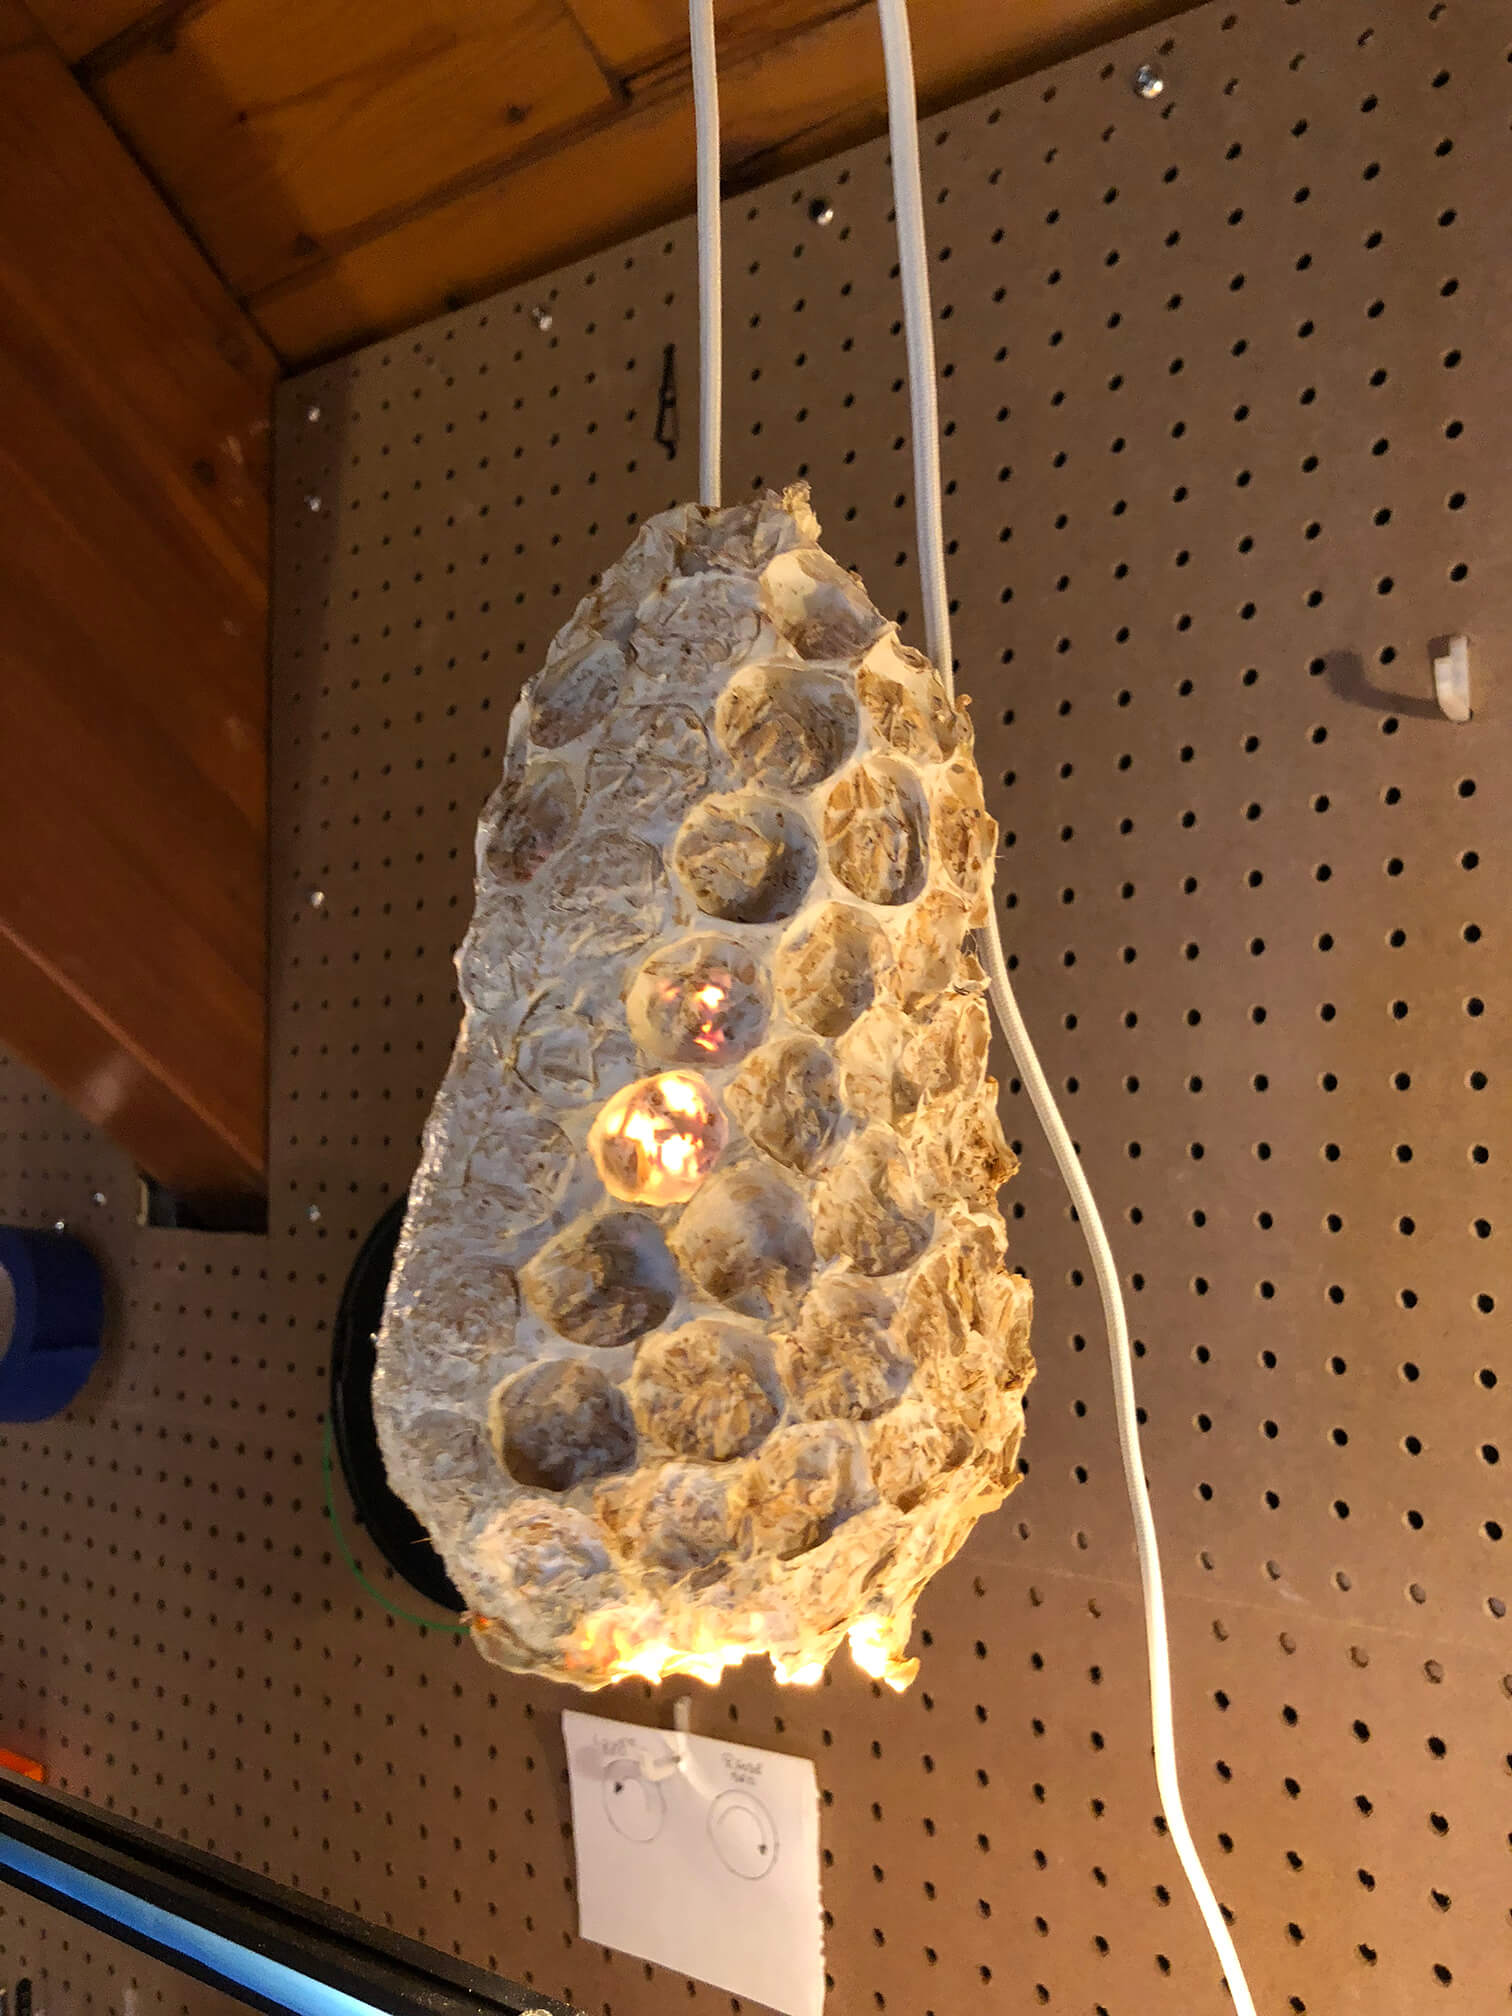 Mycelium lampshades installed